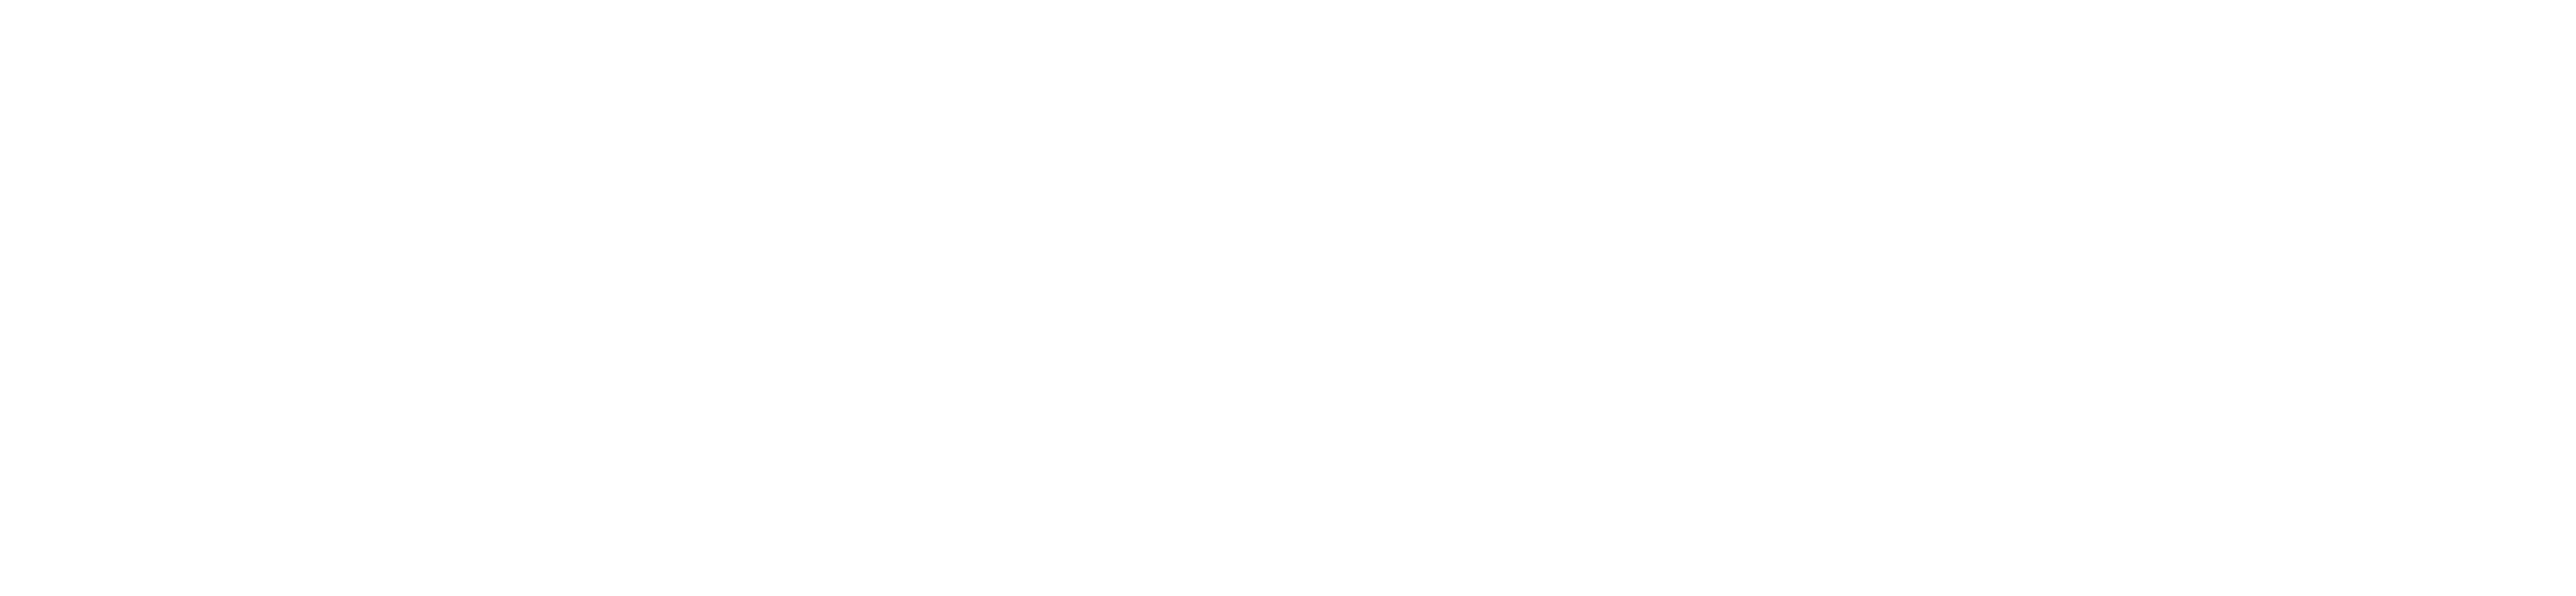 Social care logo